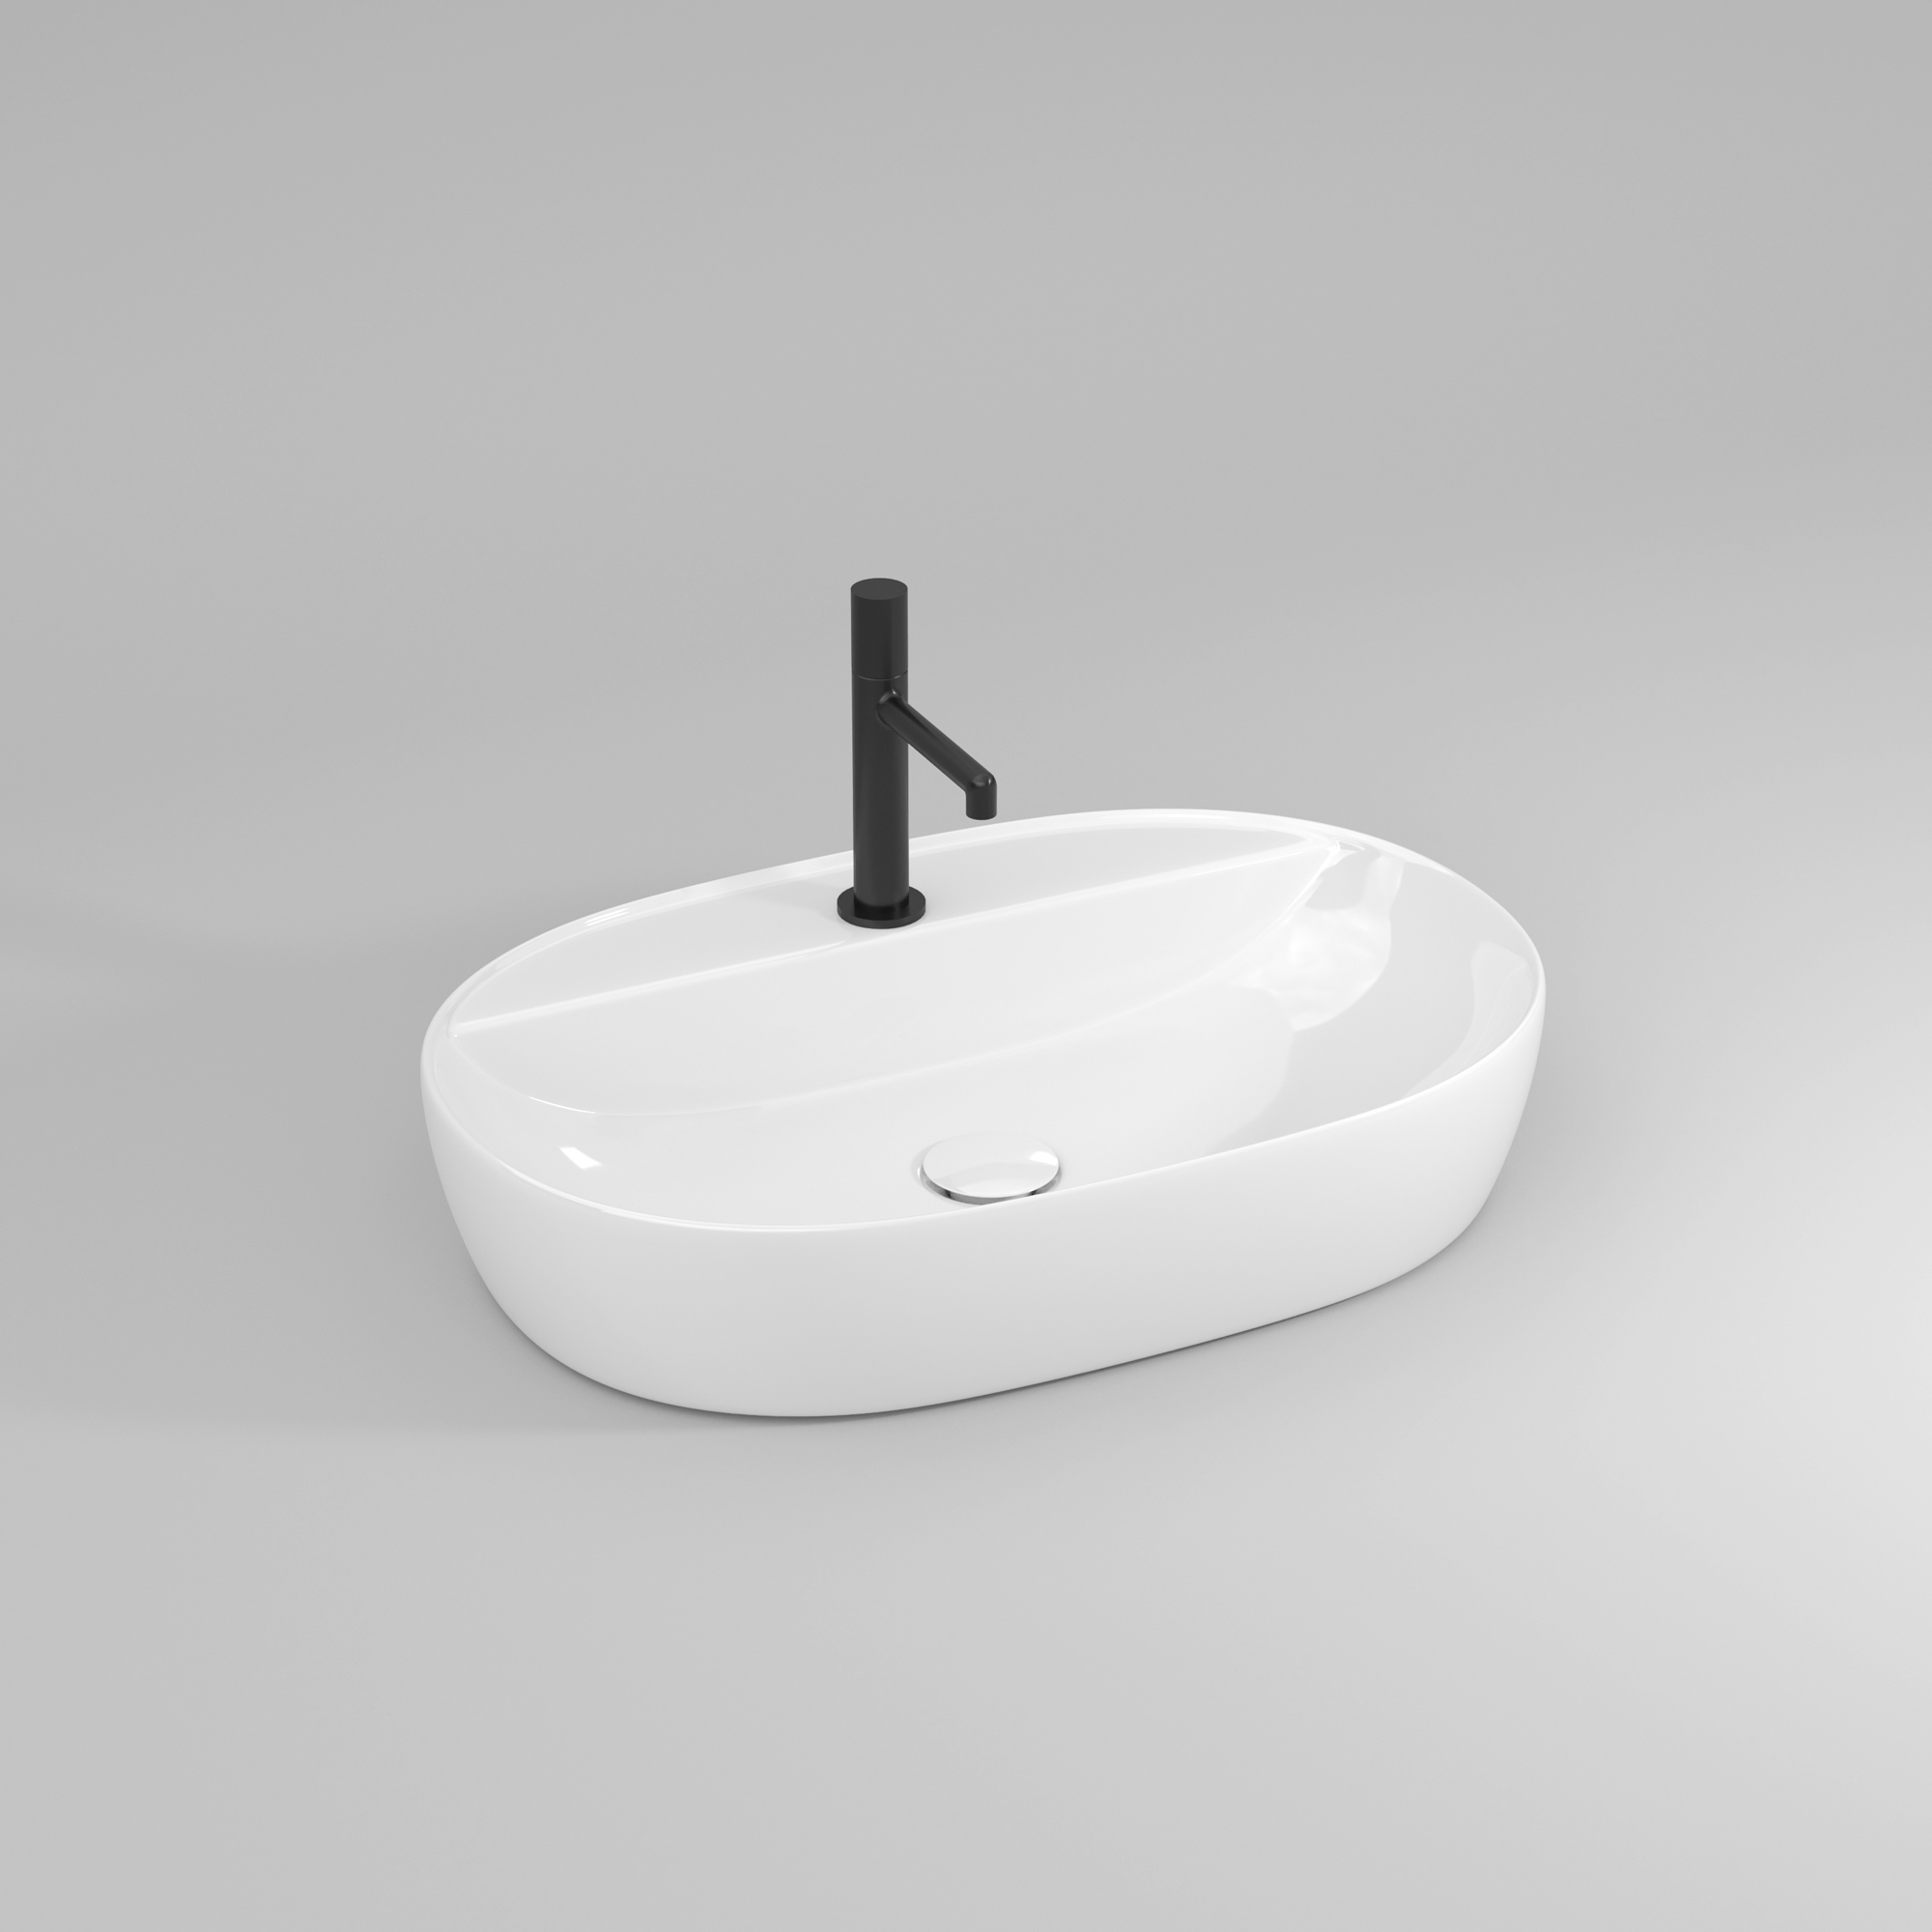 Sindy oval washbasin